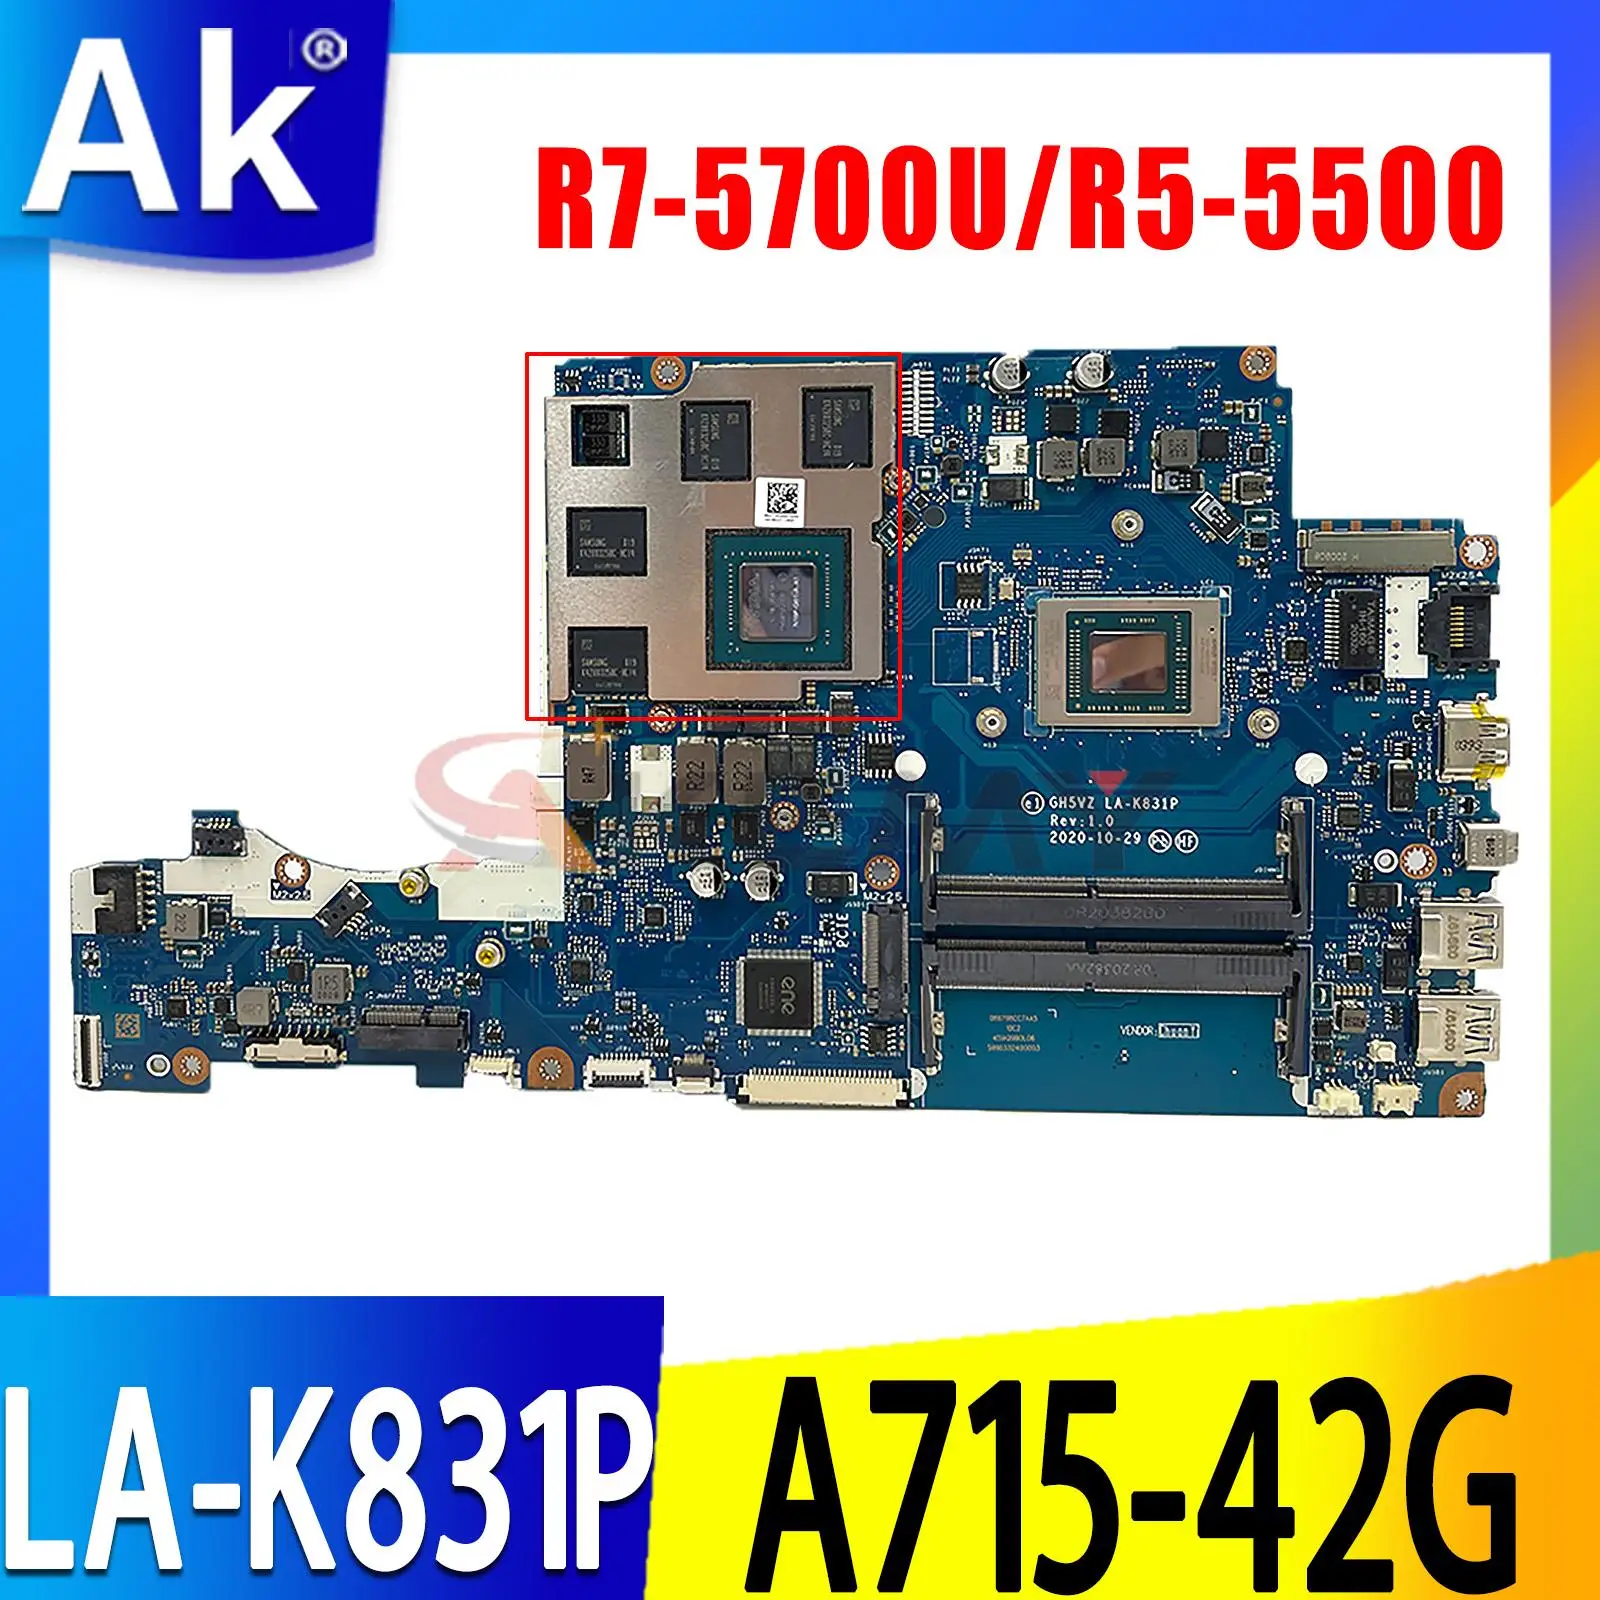 

LA-K831P Mainboard for Acer Aspire 7 A715-42G Laptop Motherboard R7-5700U/R5-5500 GPU:N18P-G61-A-A1 4GB NBQAY11004 DDR4 Teste OK